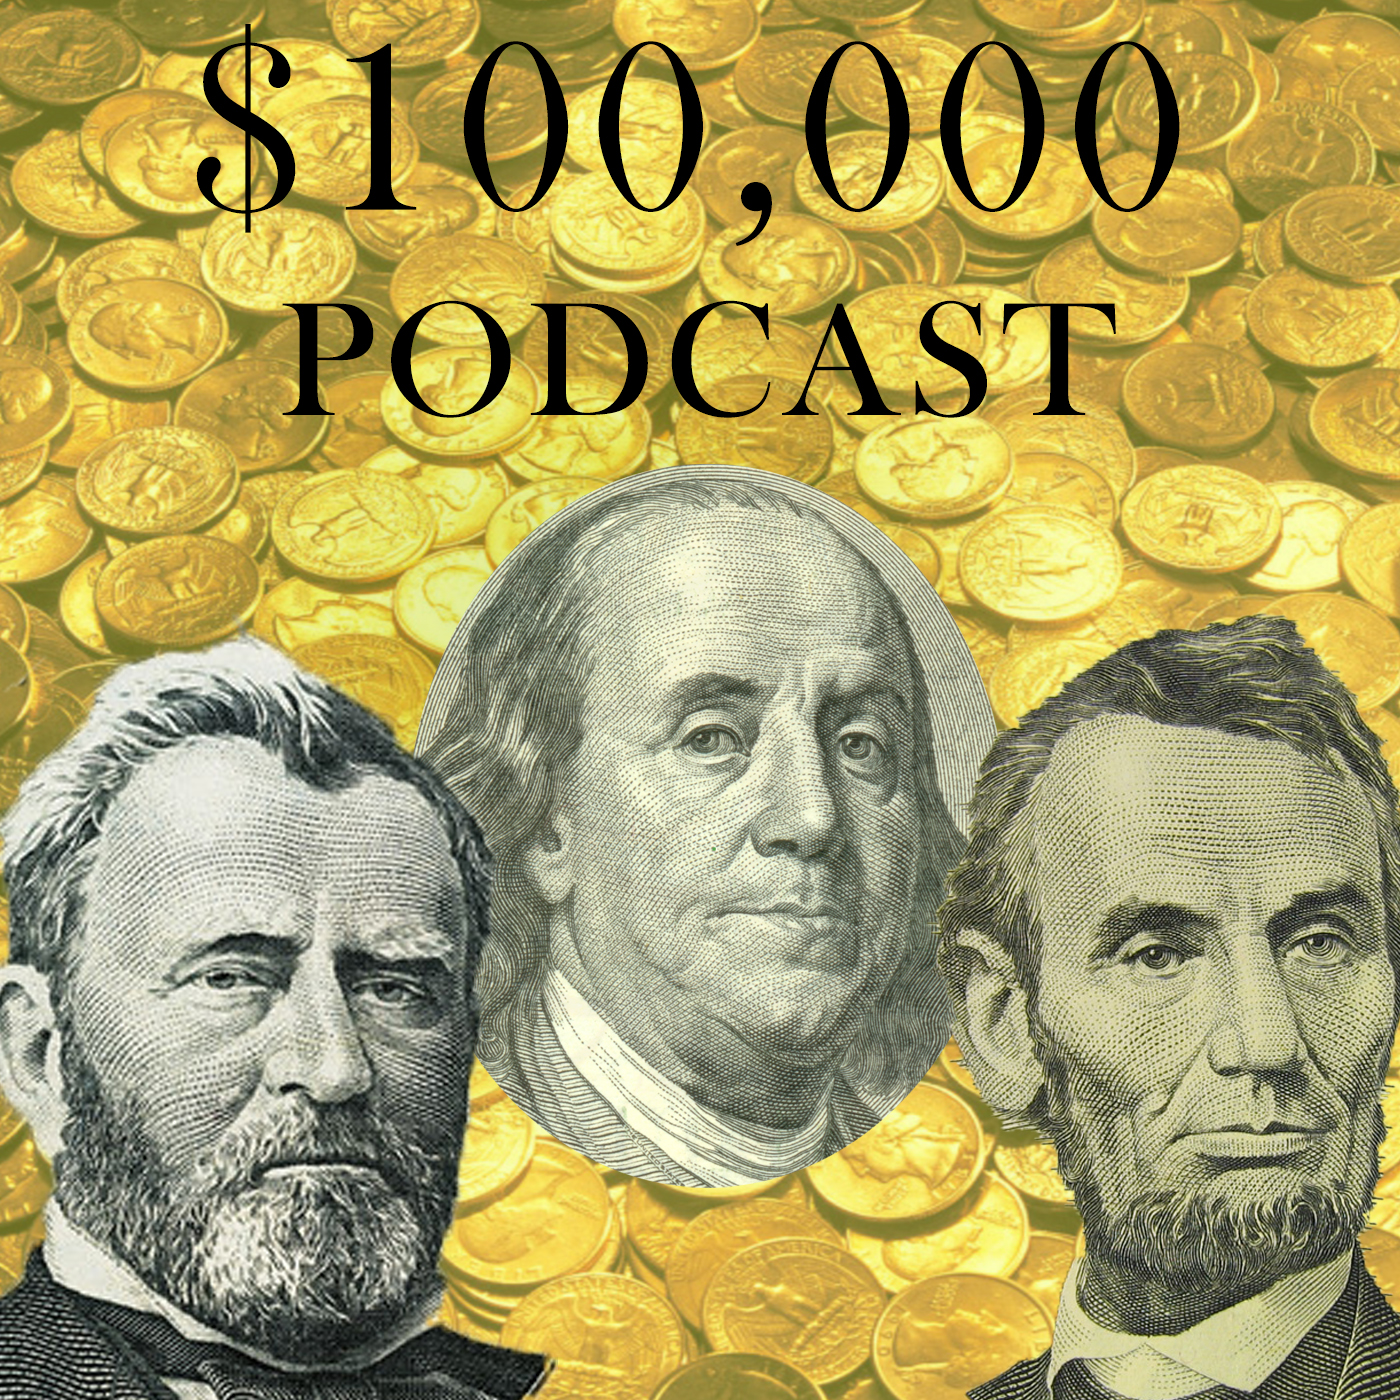 $100,000 Podcast